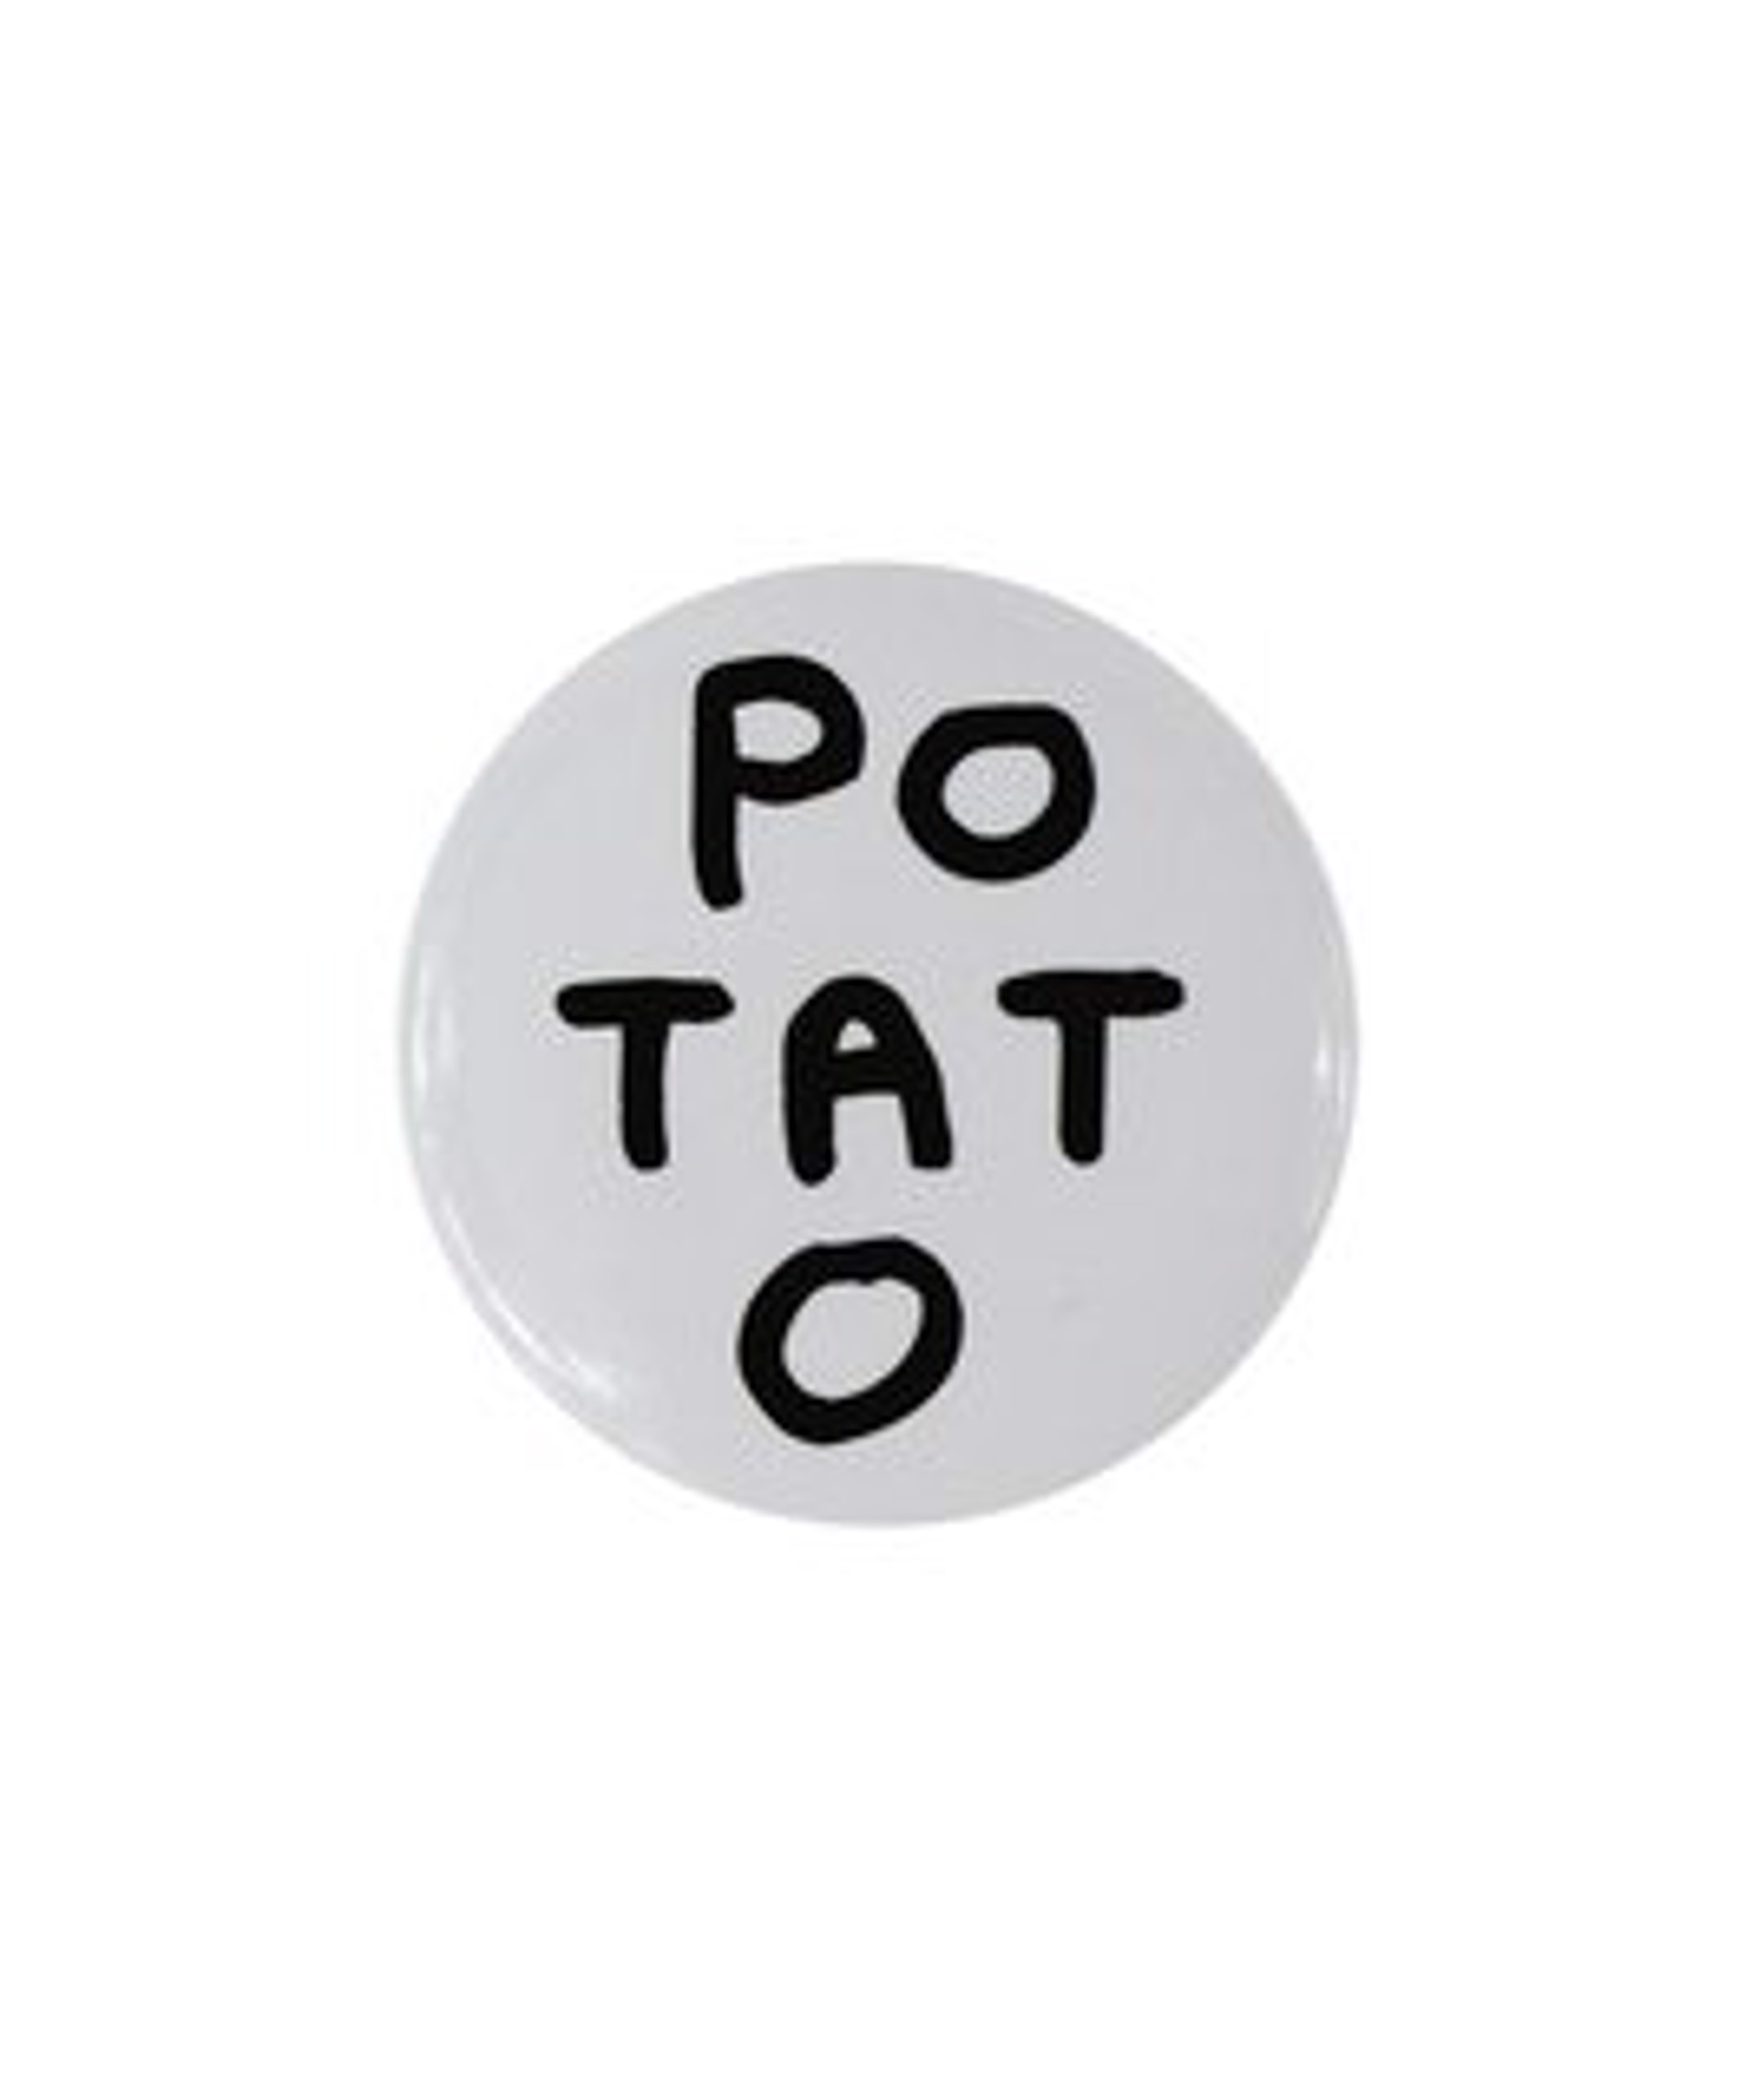 Potato Pin Badge by David Shrigley